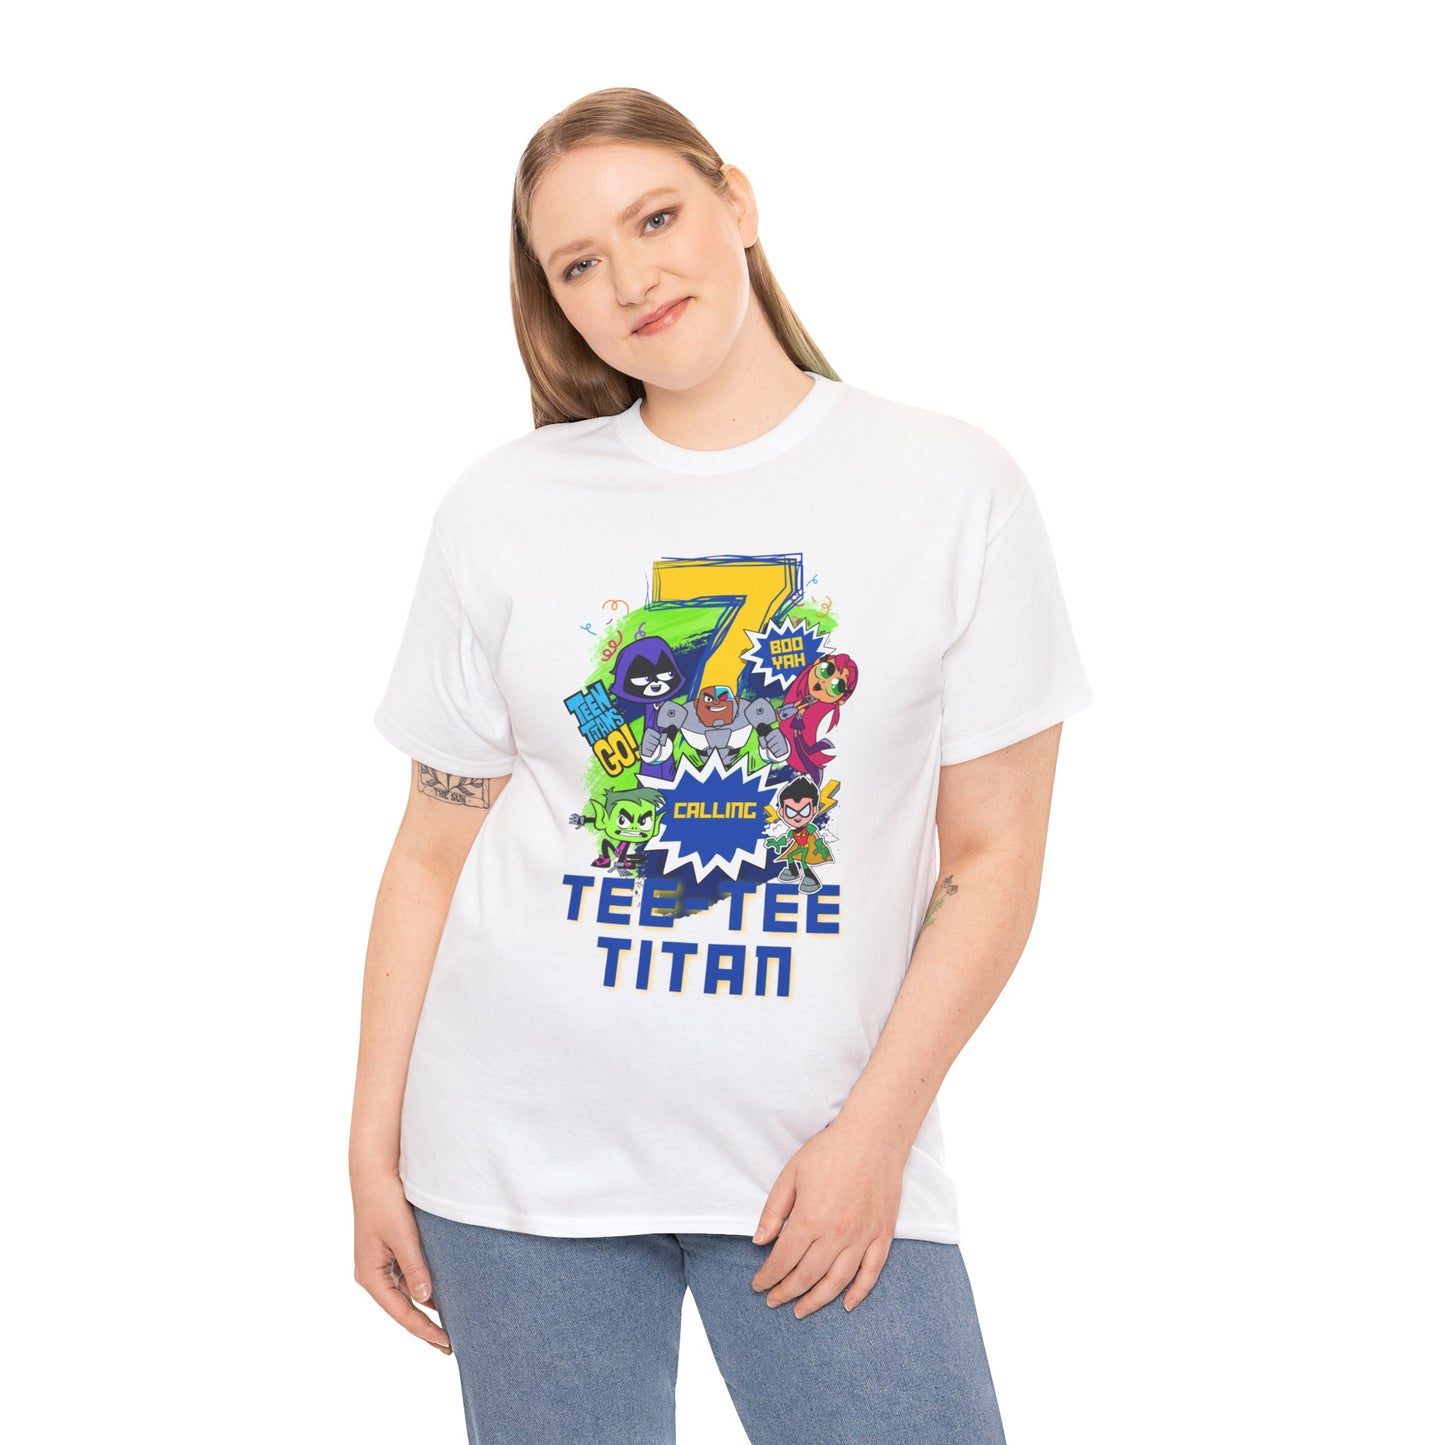 Teen Titans Go - Birthday Boy - Tee Tee Titan